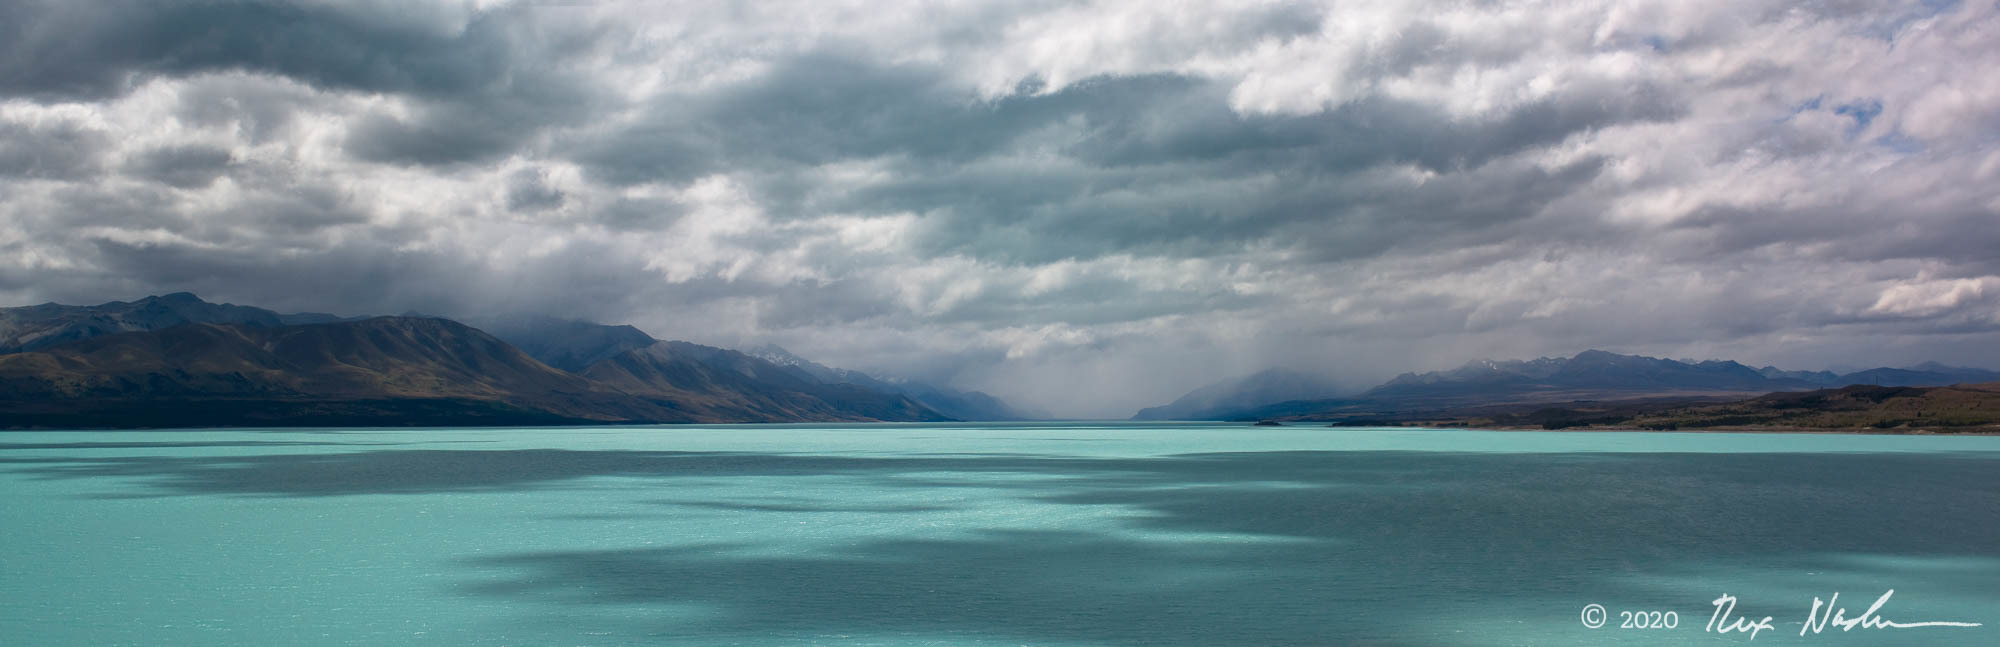 Lake Tekapo - South Island, New Zealand